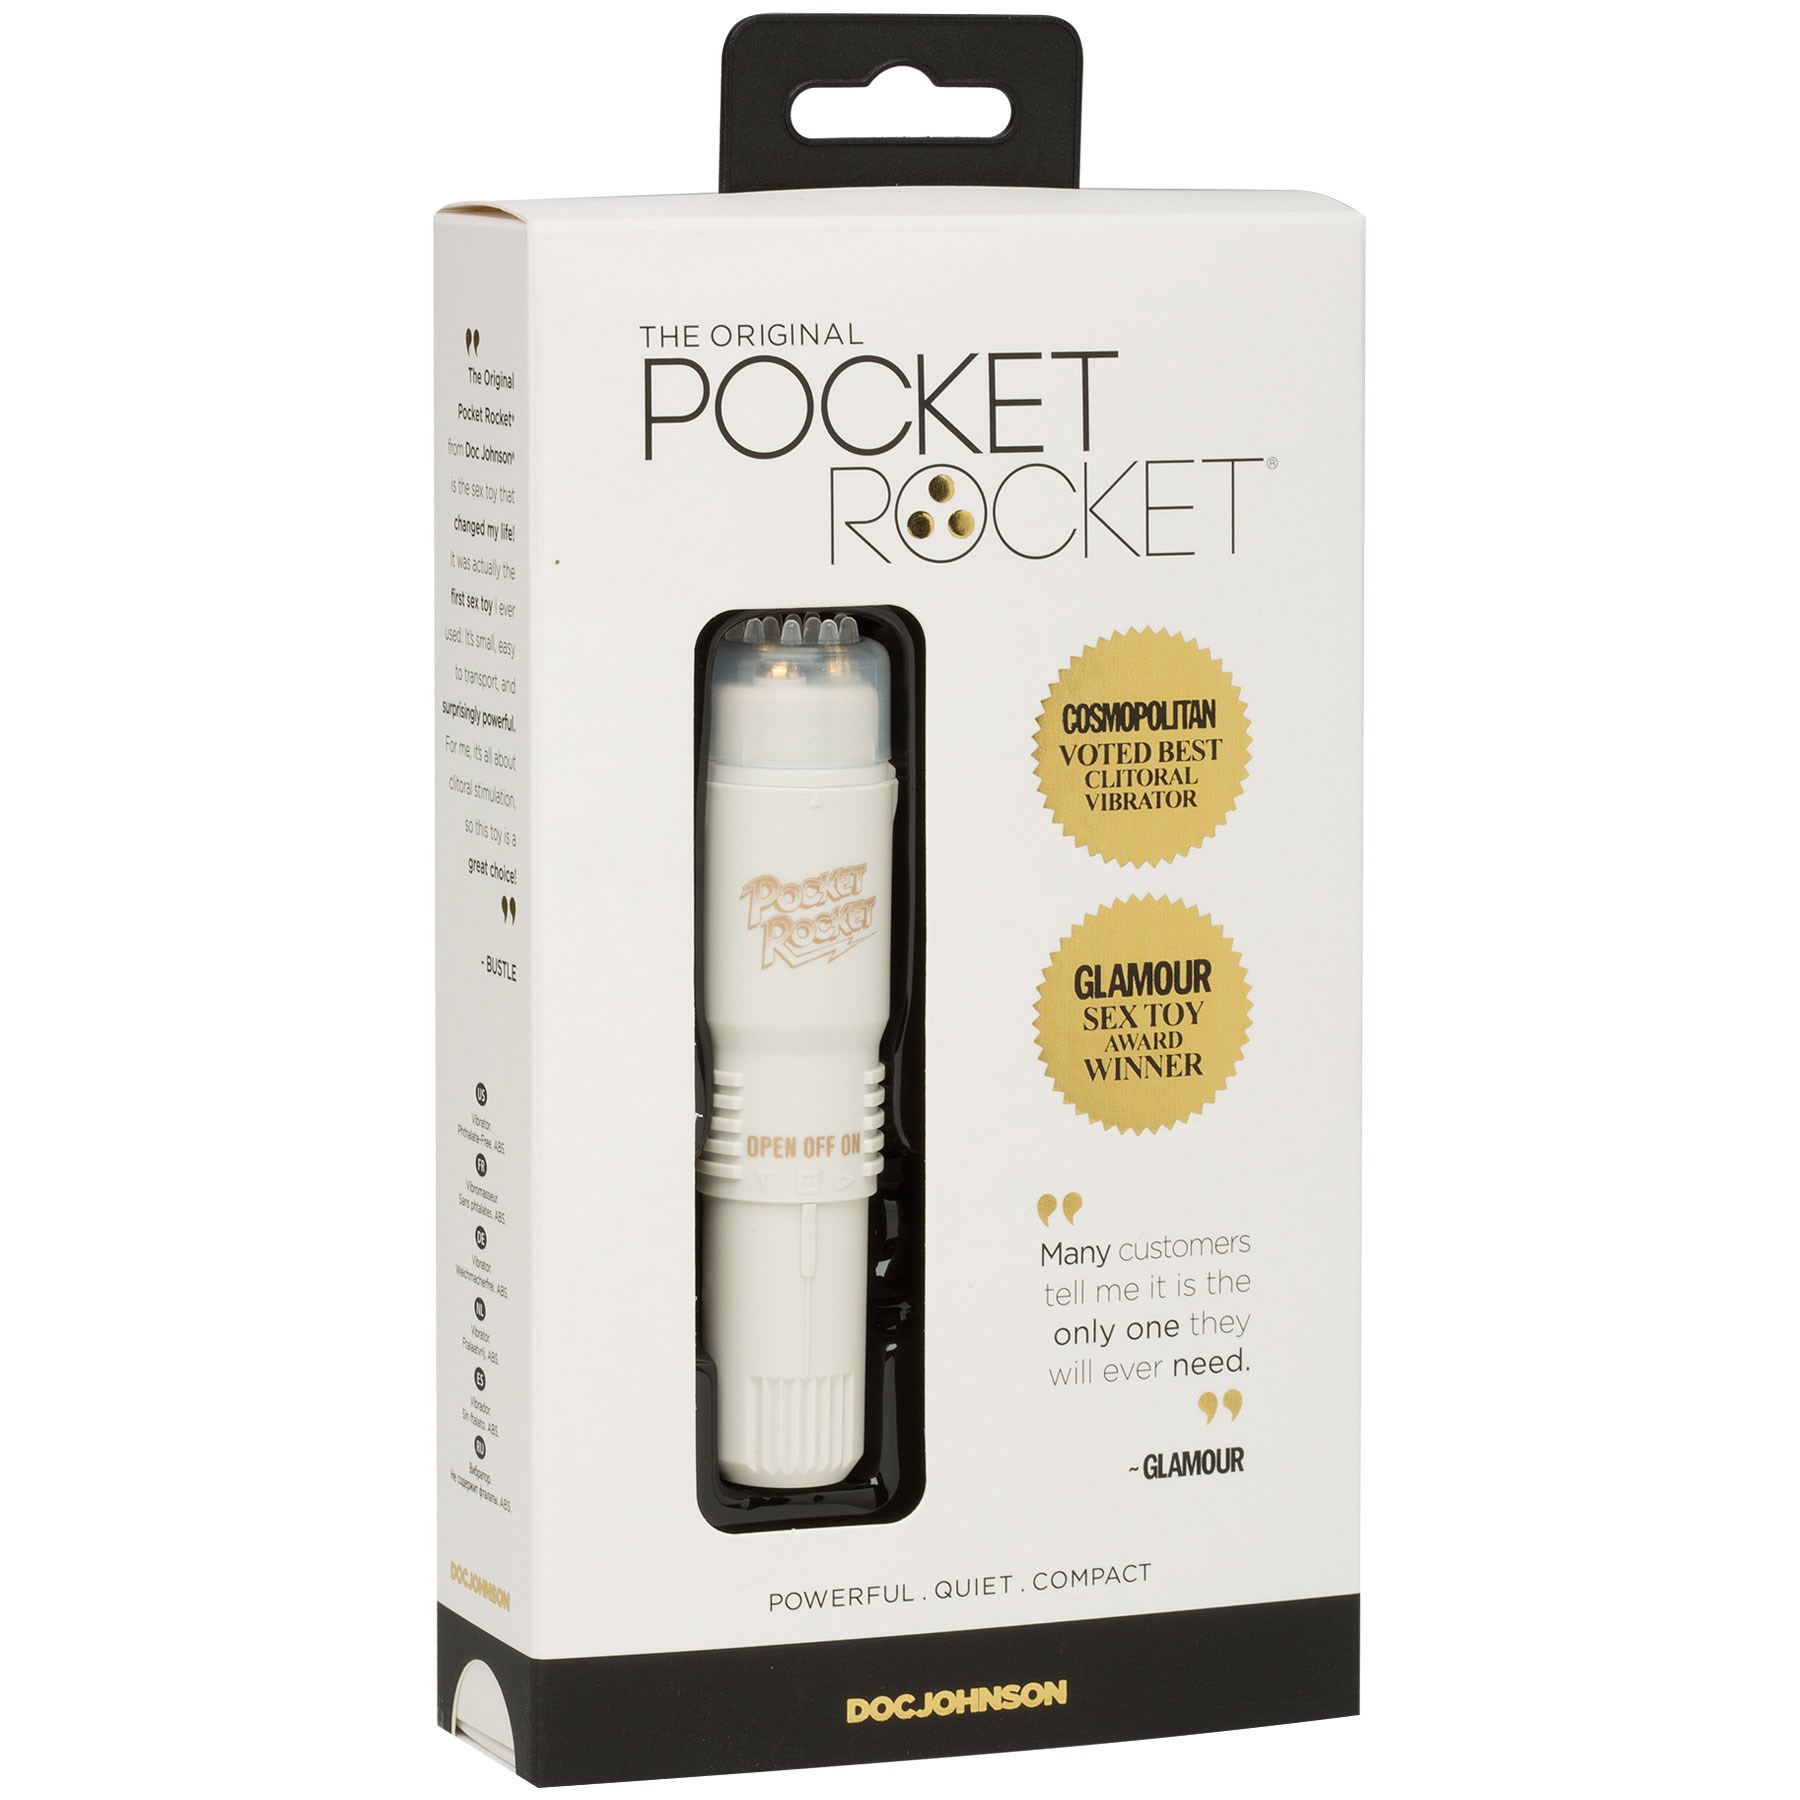 The Original Pocket Rocket white box